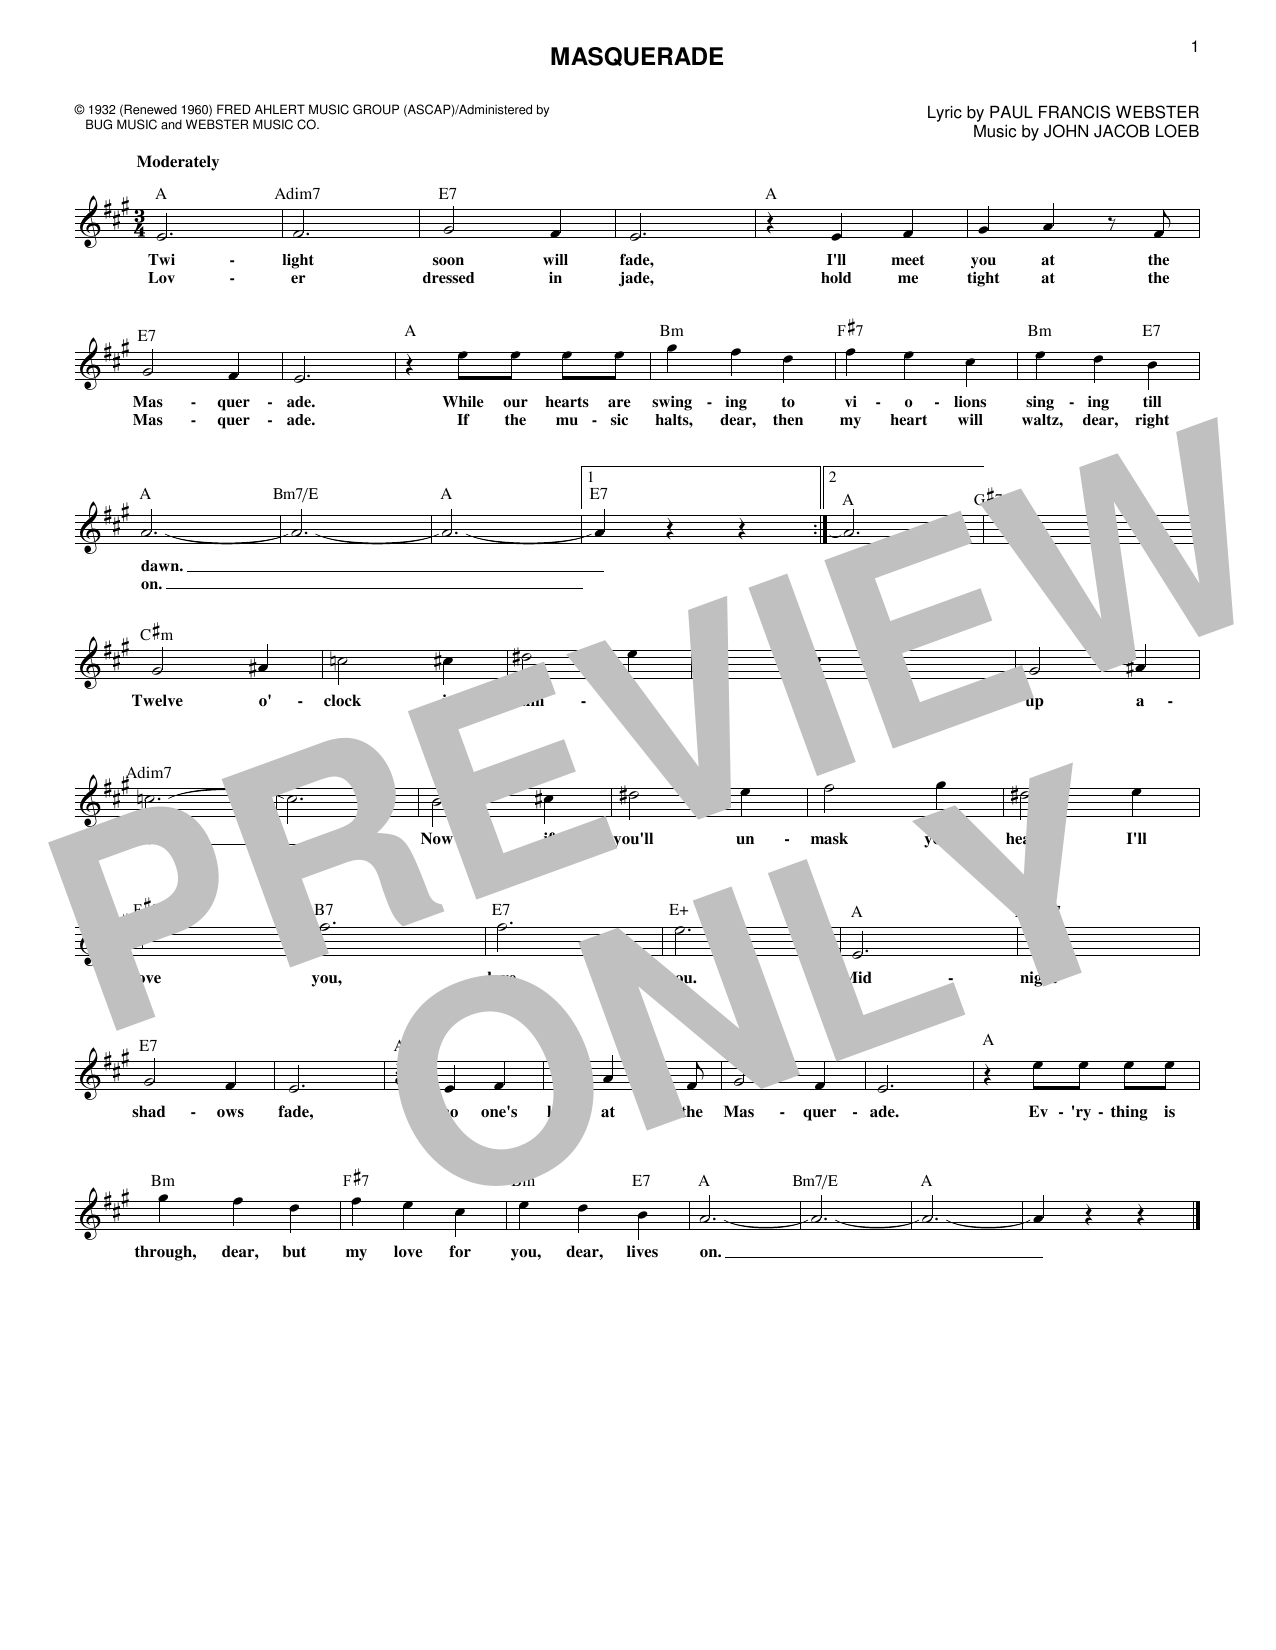 John Jacob Loeb Masquerade Sheet Music Notes & Chords for Melody Line, Lyrics & Chords - Download or Print PDF